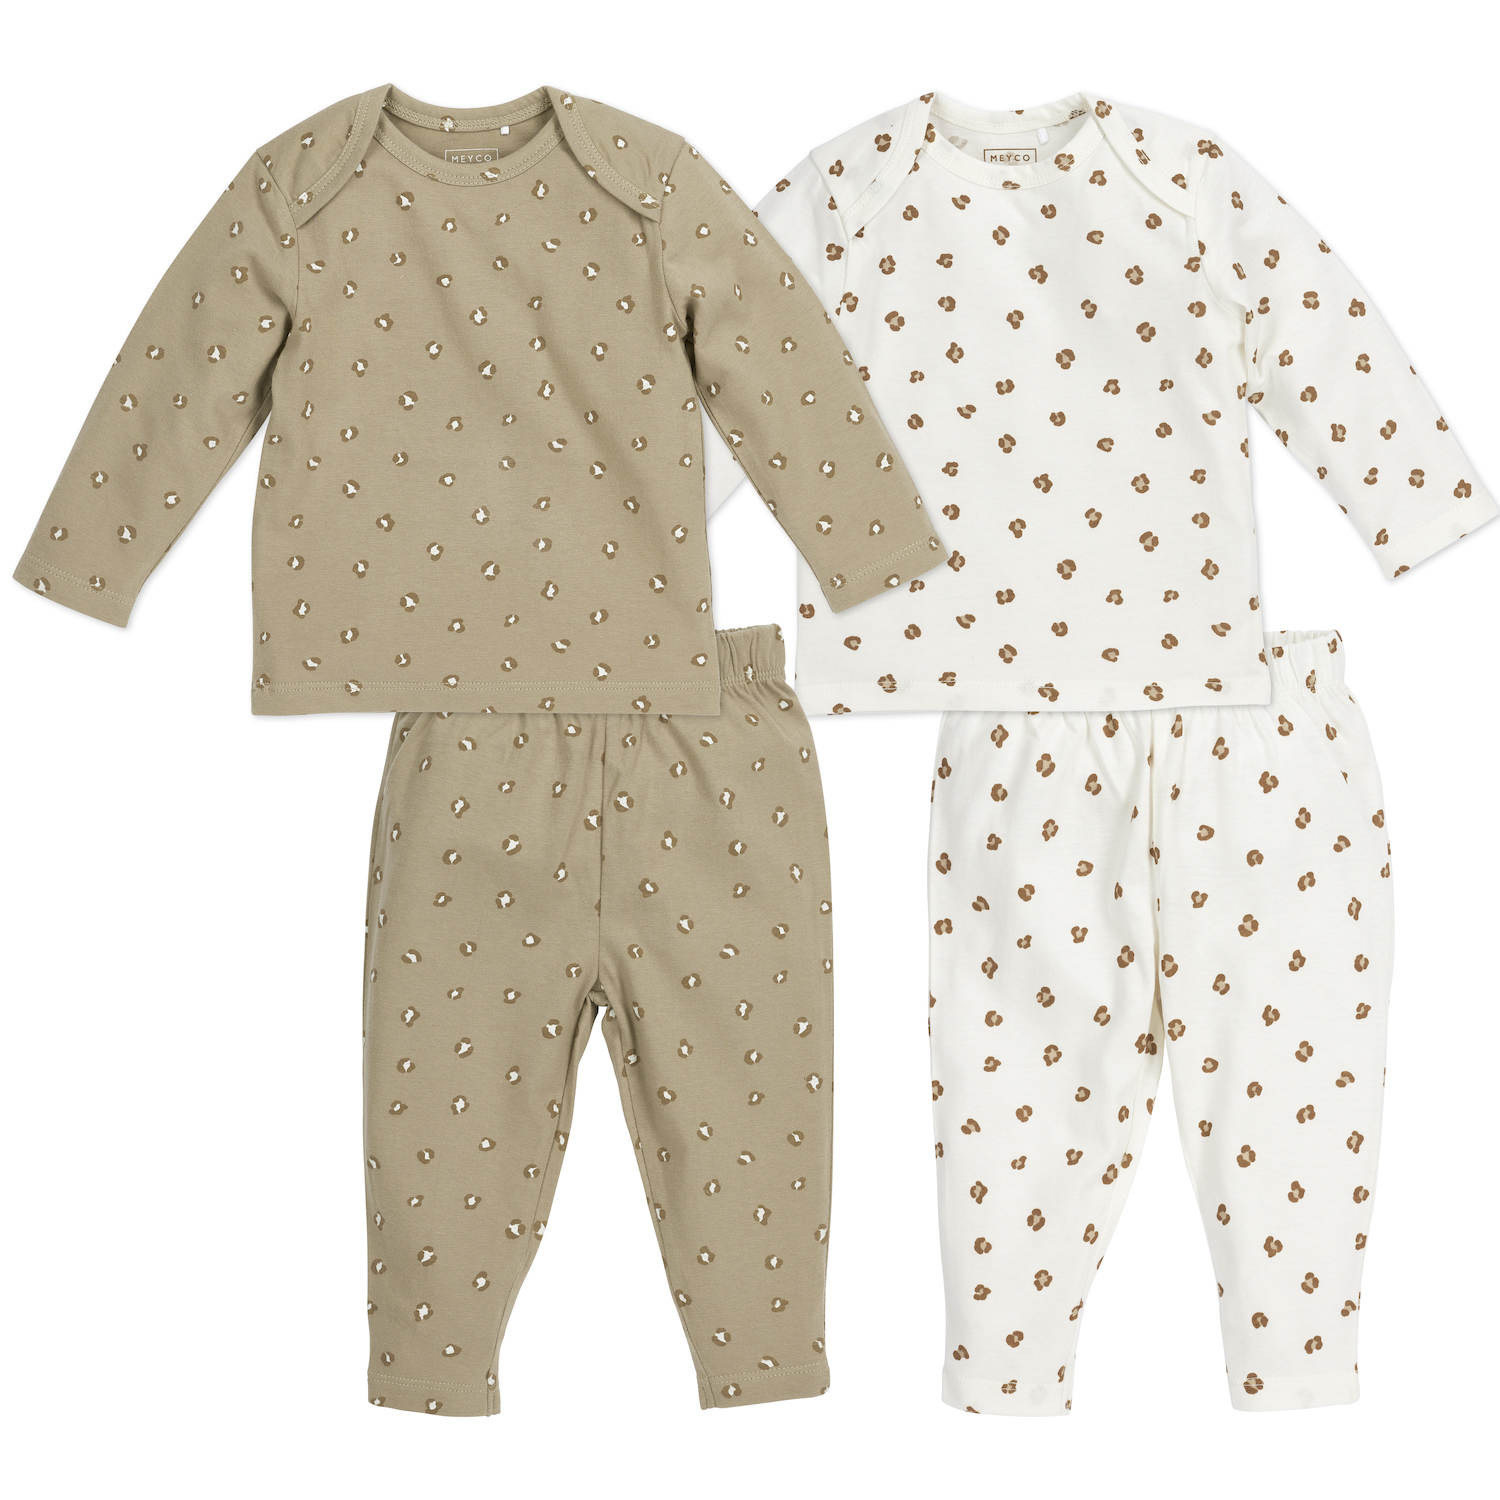 Baby pyjama 2-pack Mini Panther - Offwhite/Sand - Größe 62/68